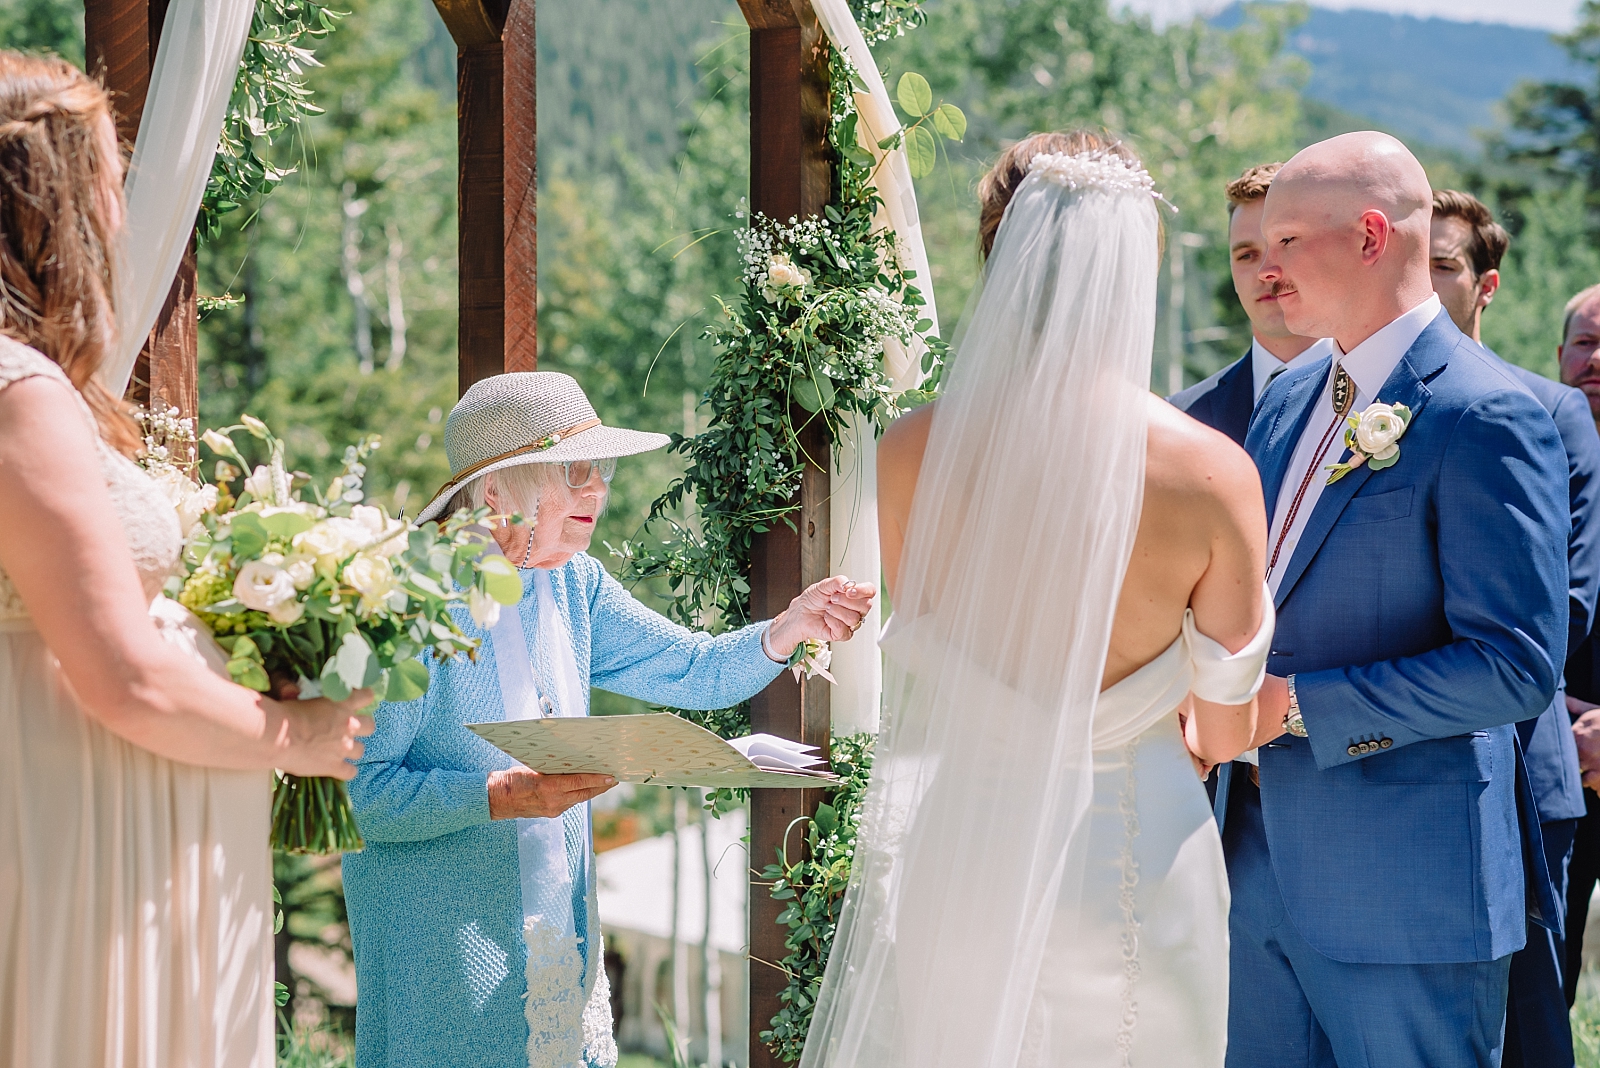 grandma offers wedding rings at ceremony